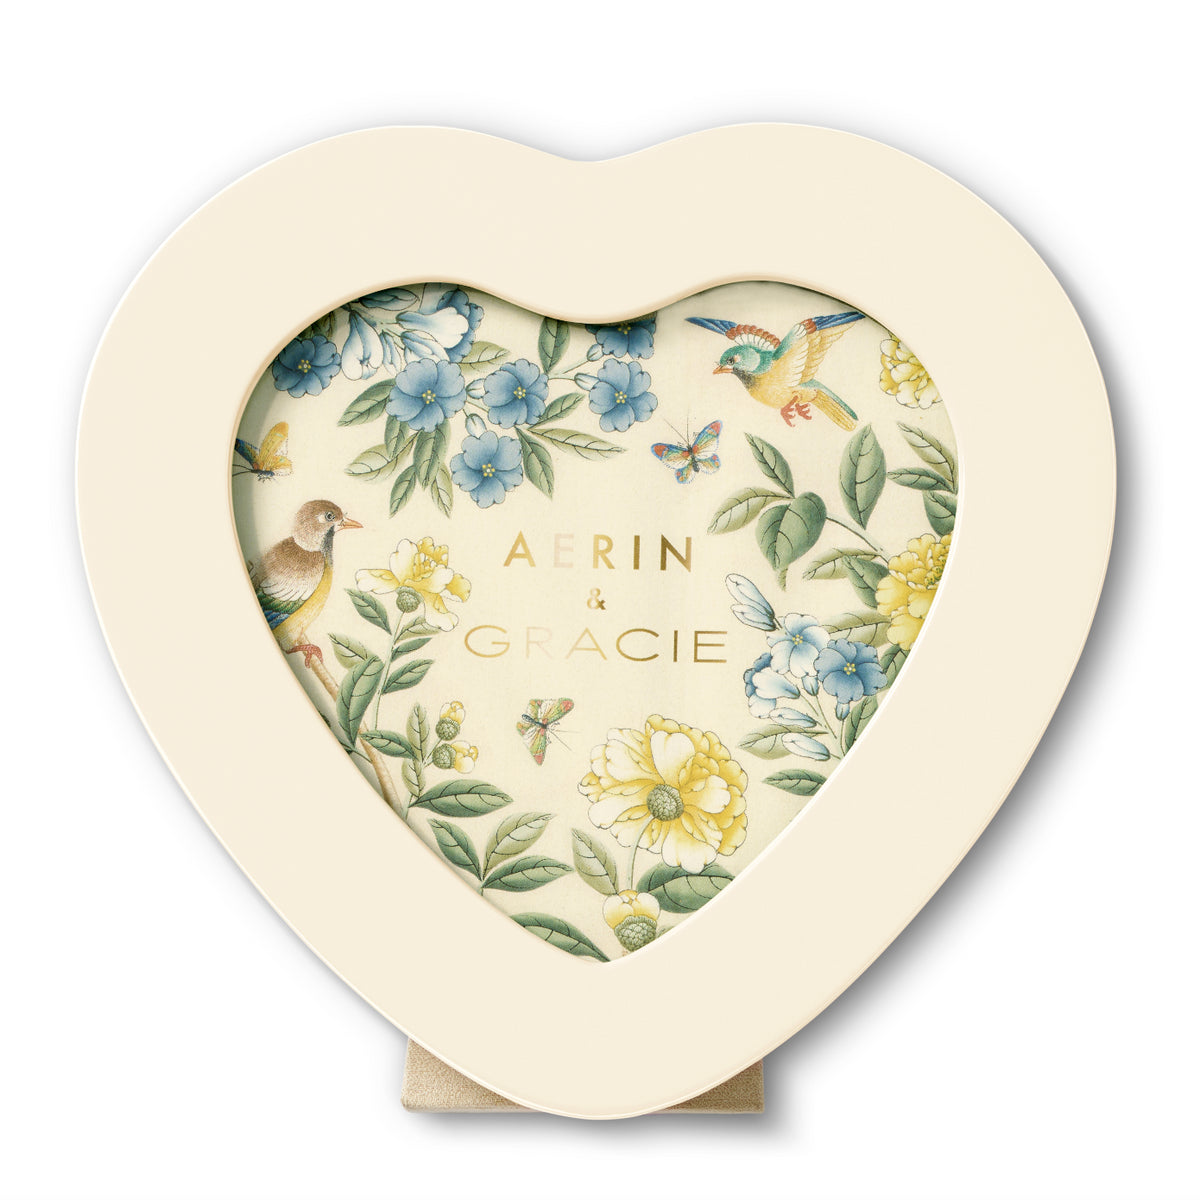 AERIN & Gracie Heathcote Lacquer Heart Frame, Cream